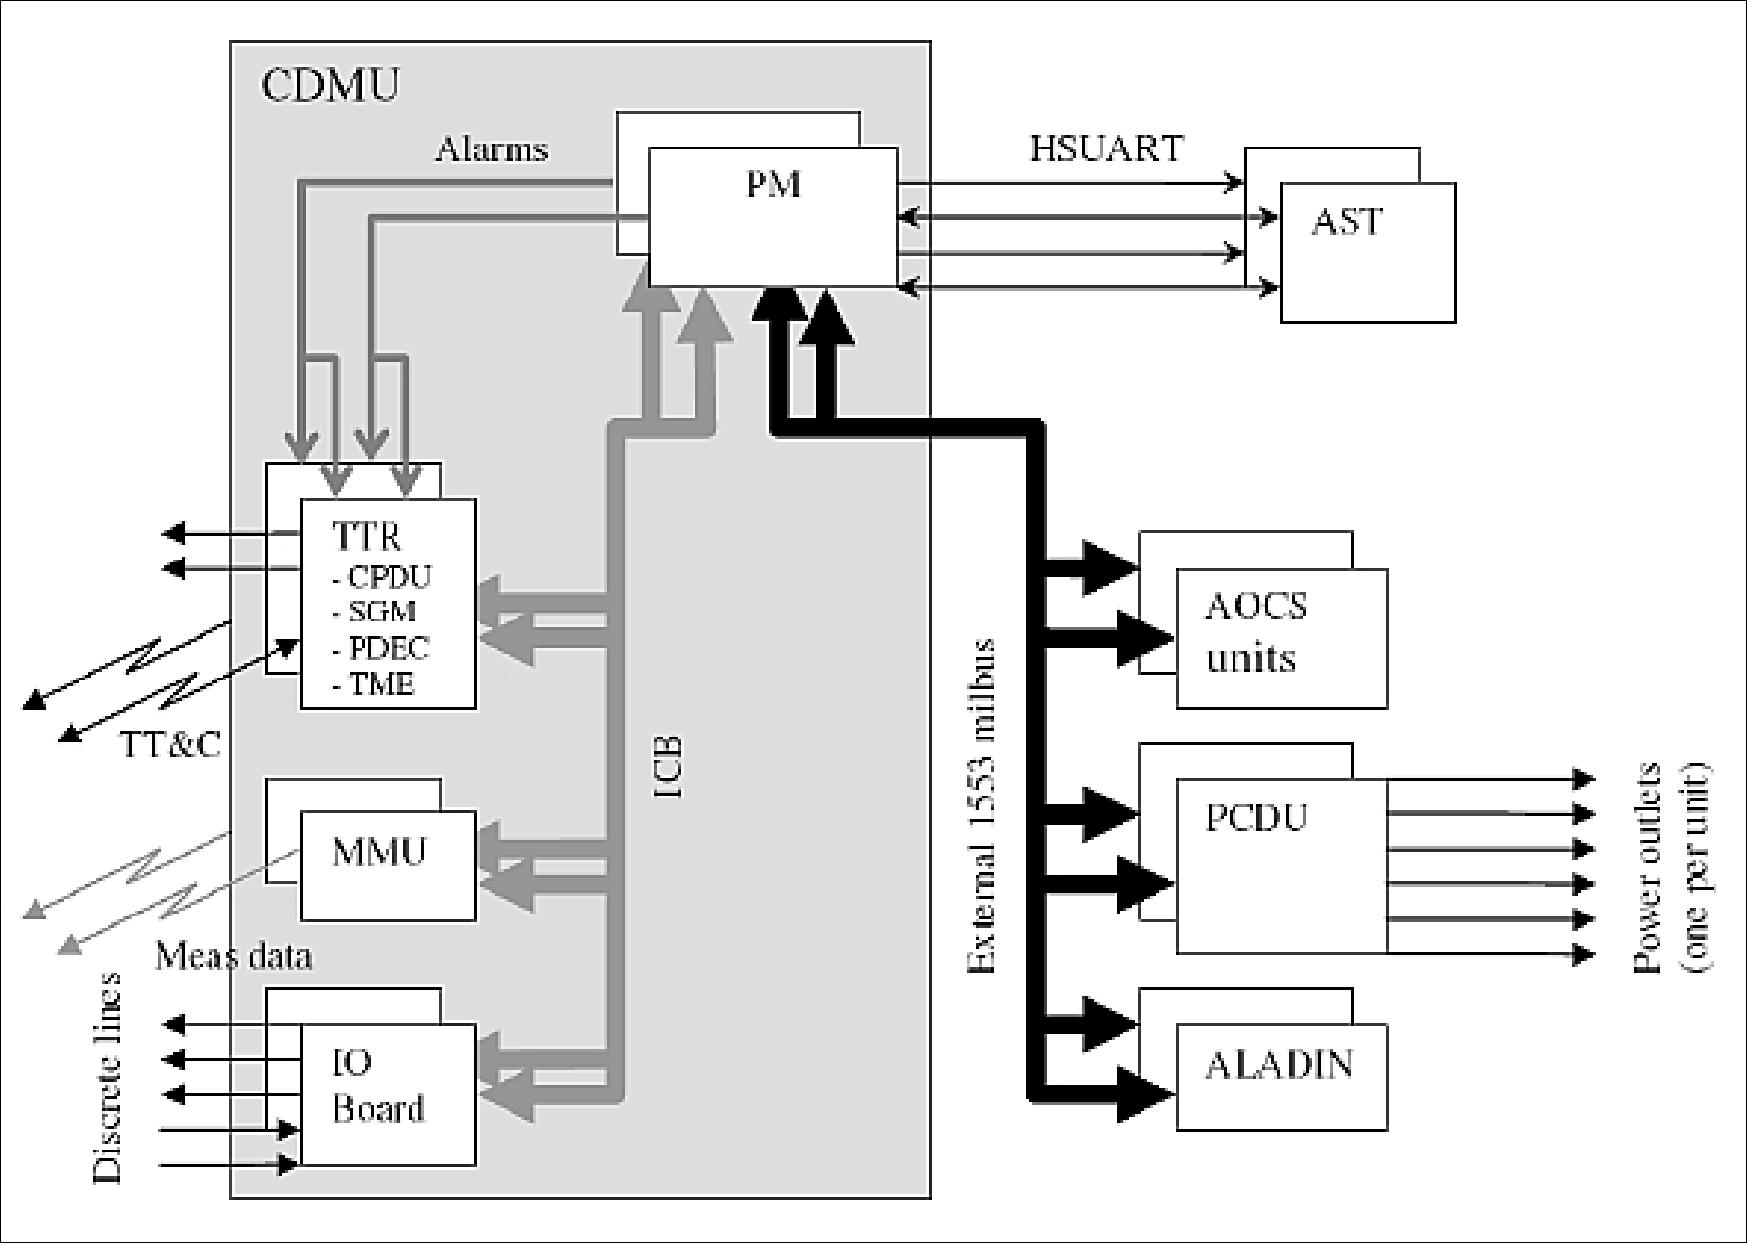 Figure 2: Overview of the avionics system (image credit: EADS Astrium Ltd.)